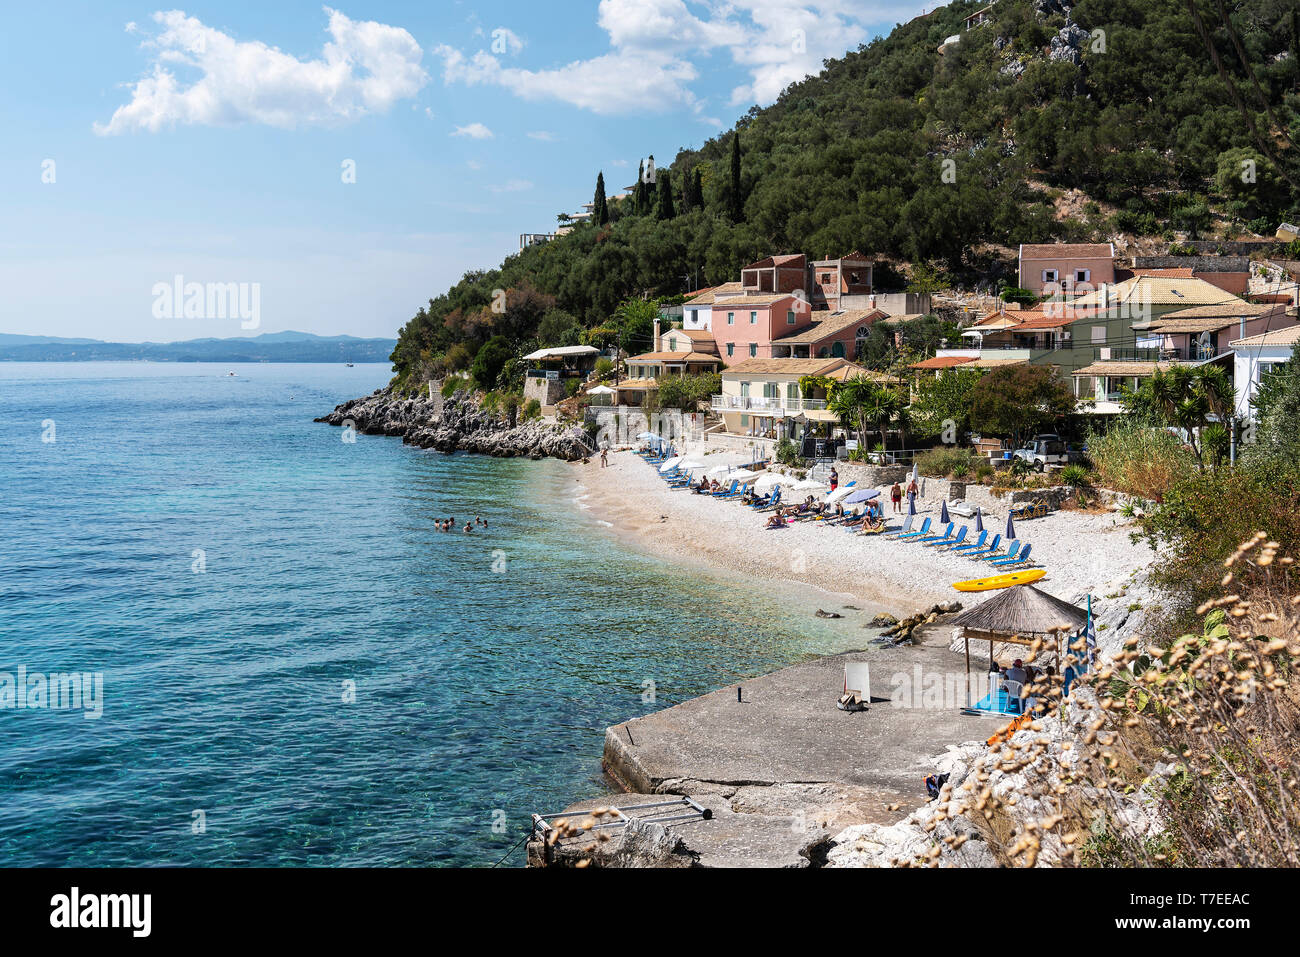 Kaminaki, beach, Nissaki, Corfu Island, Ionian Islands, Mediterranean Sea, Greece Stock Photo